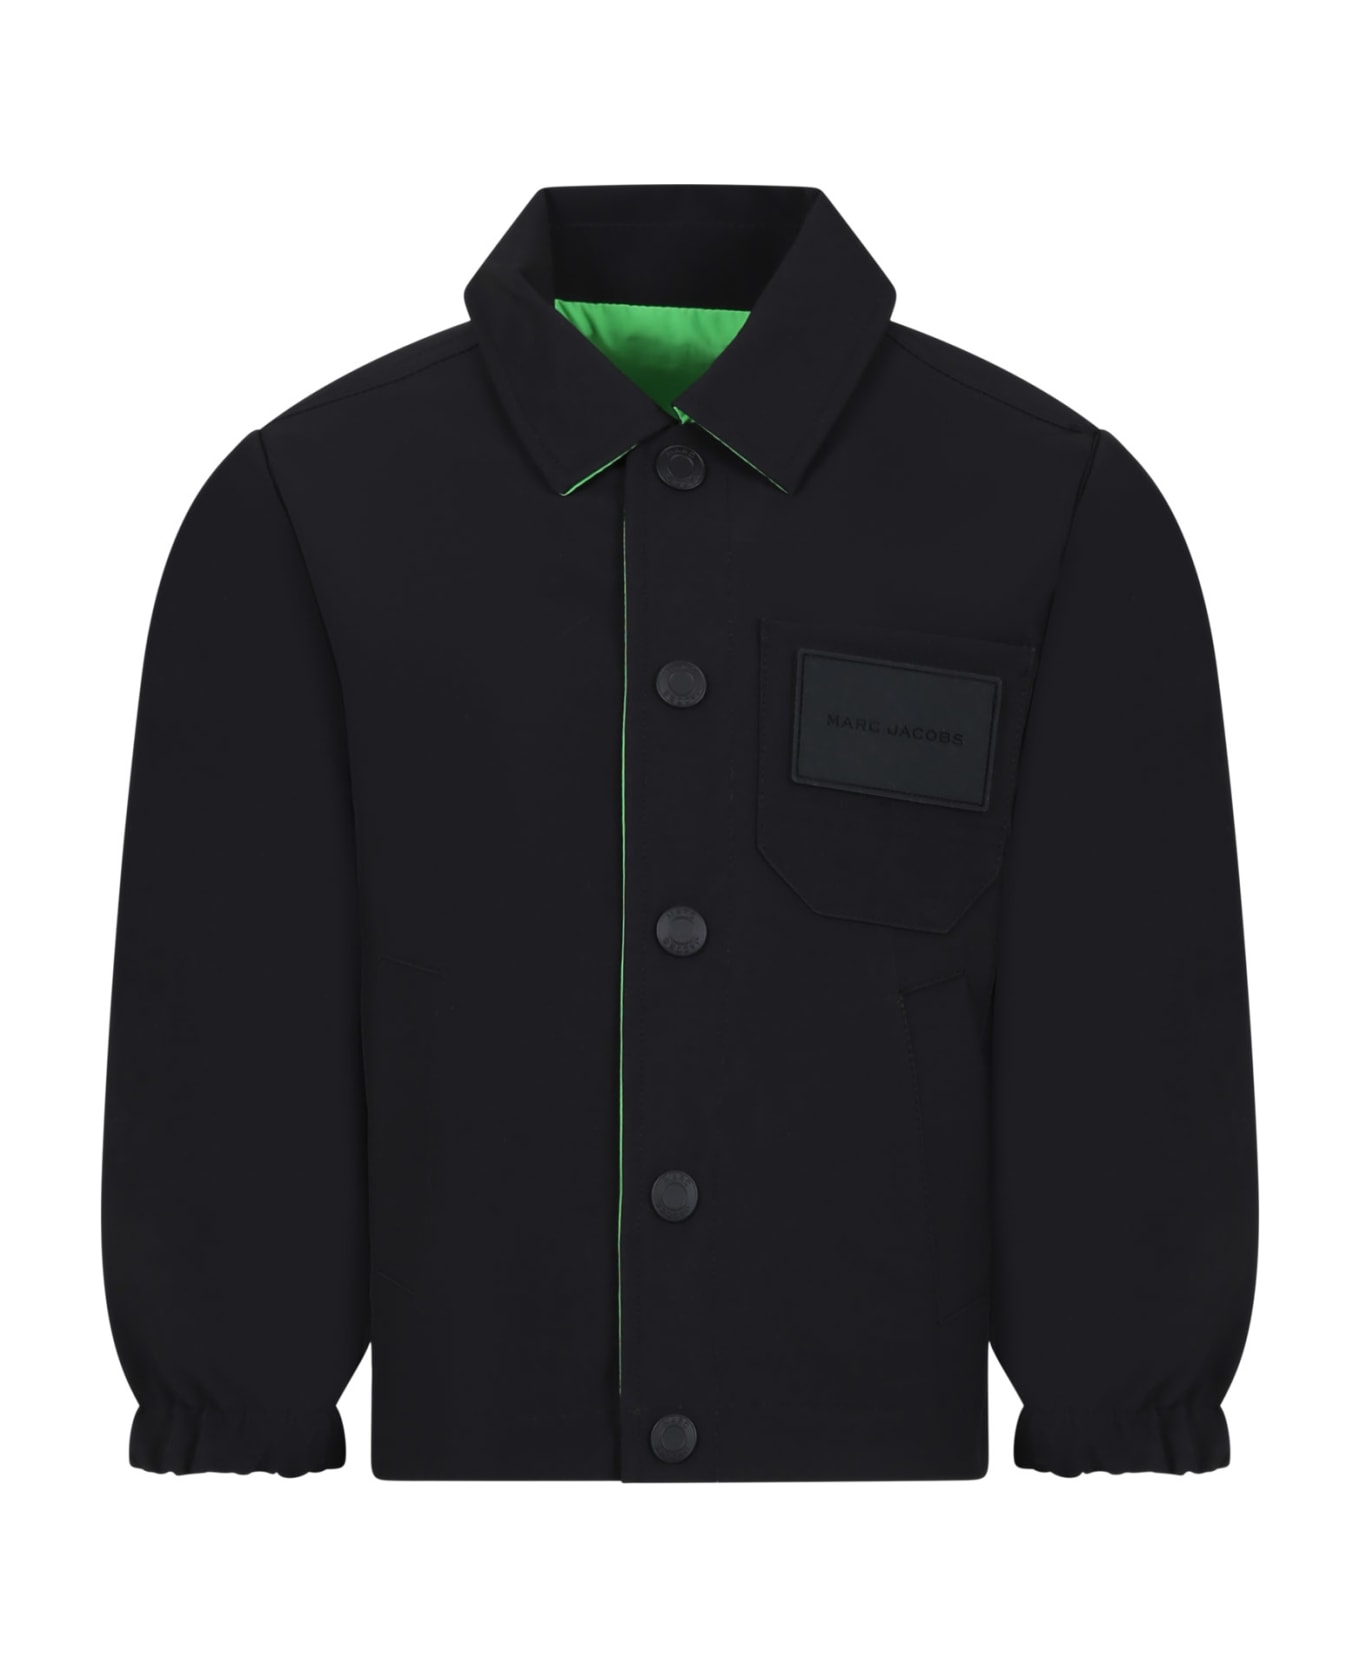 Marc Jacobs Black Jacket For Kids With Logo - Black